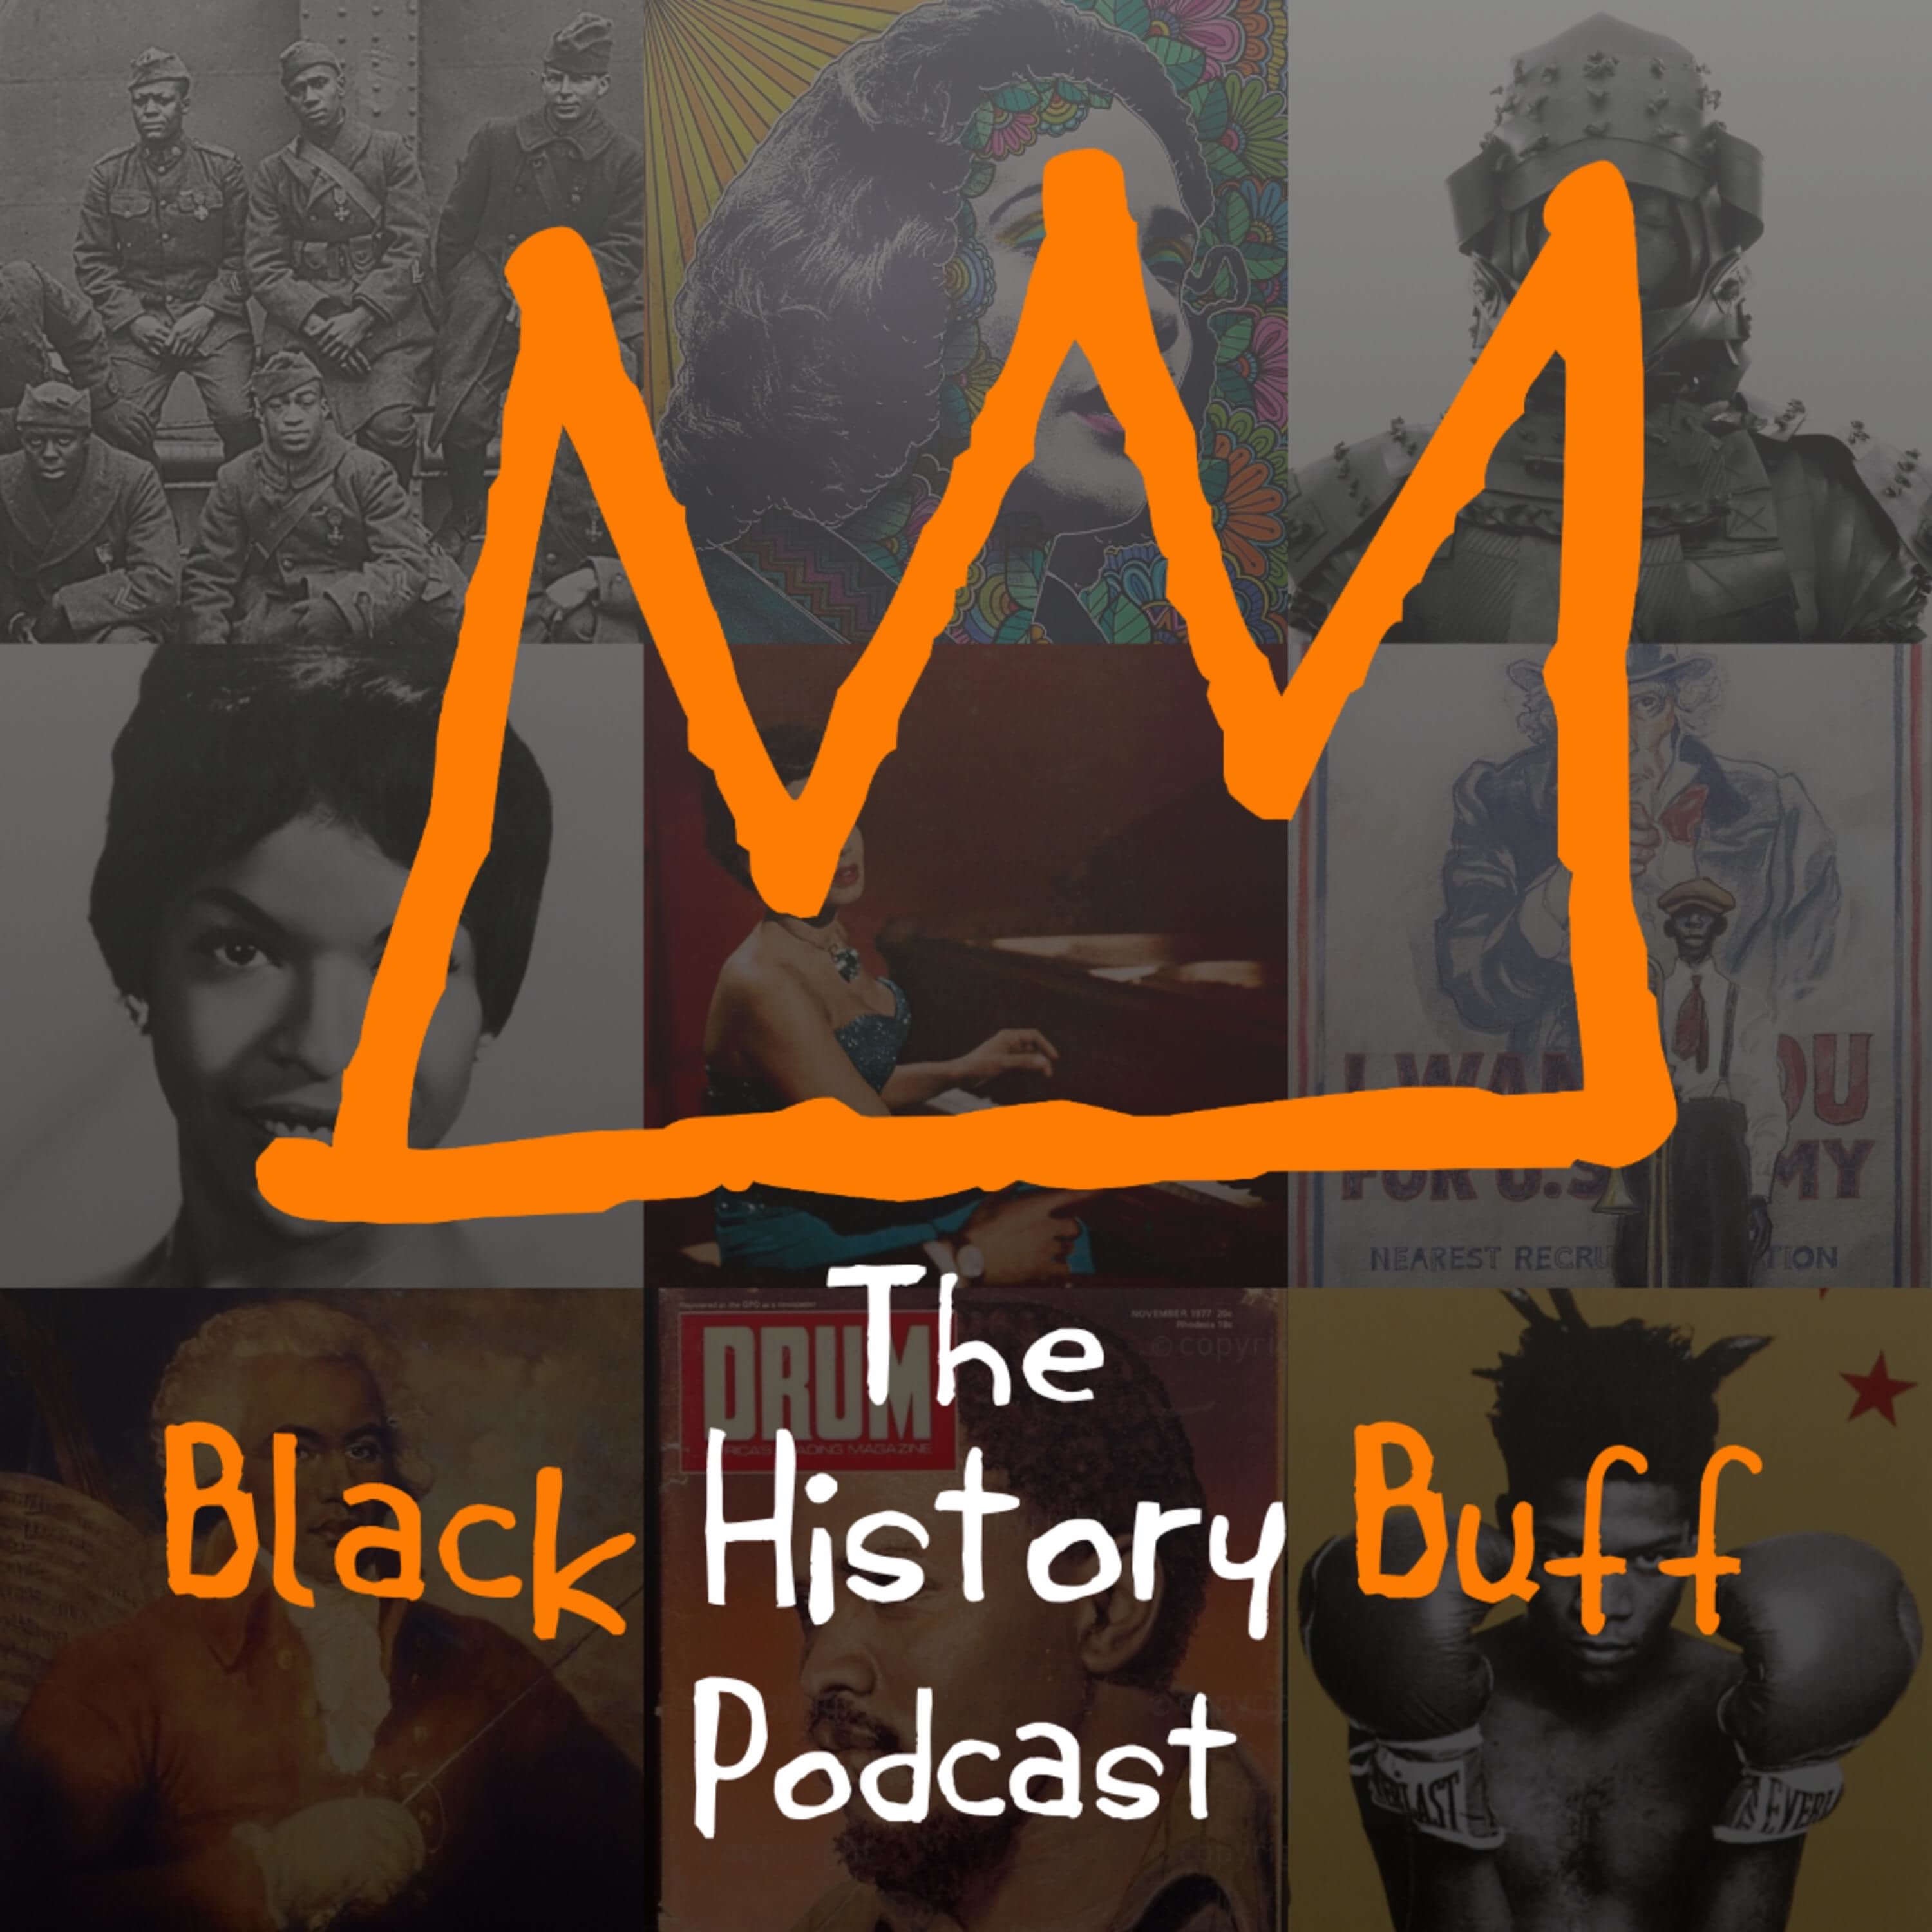 Black History Buff Podcast podcast show image